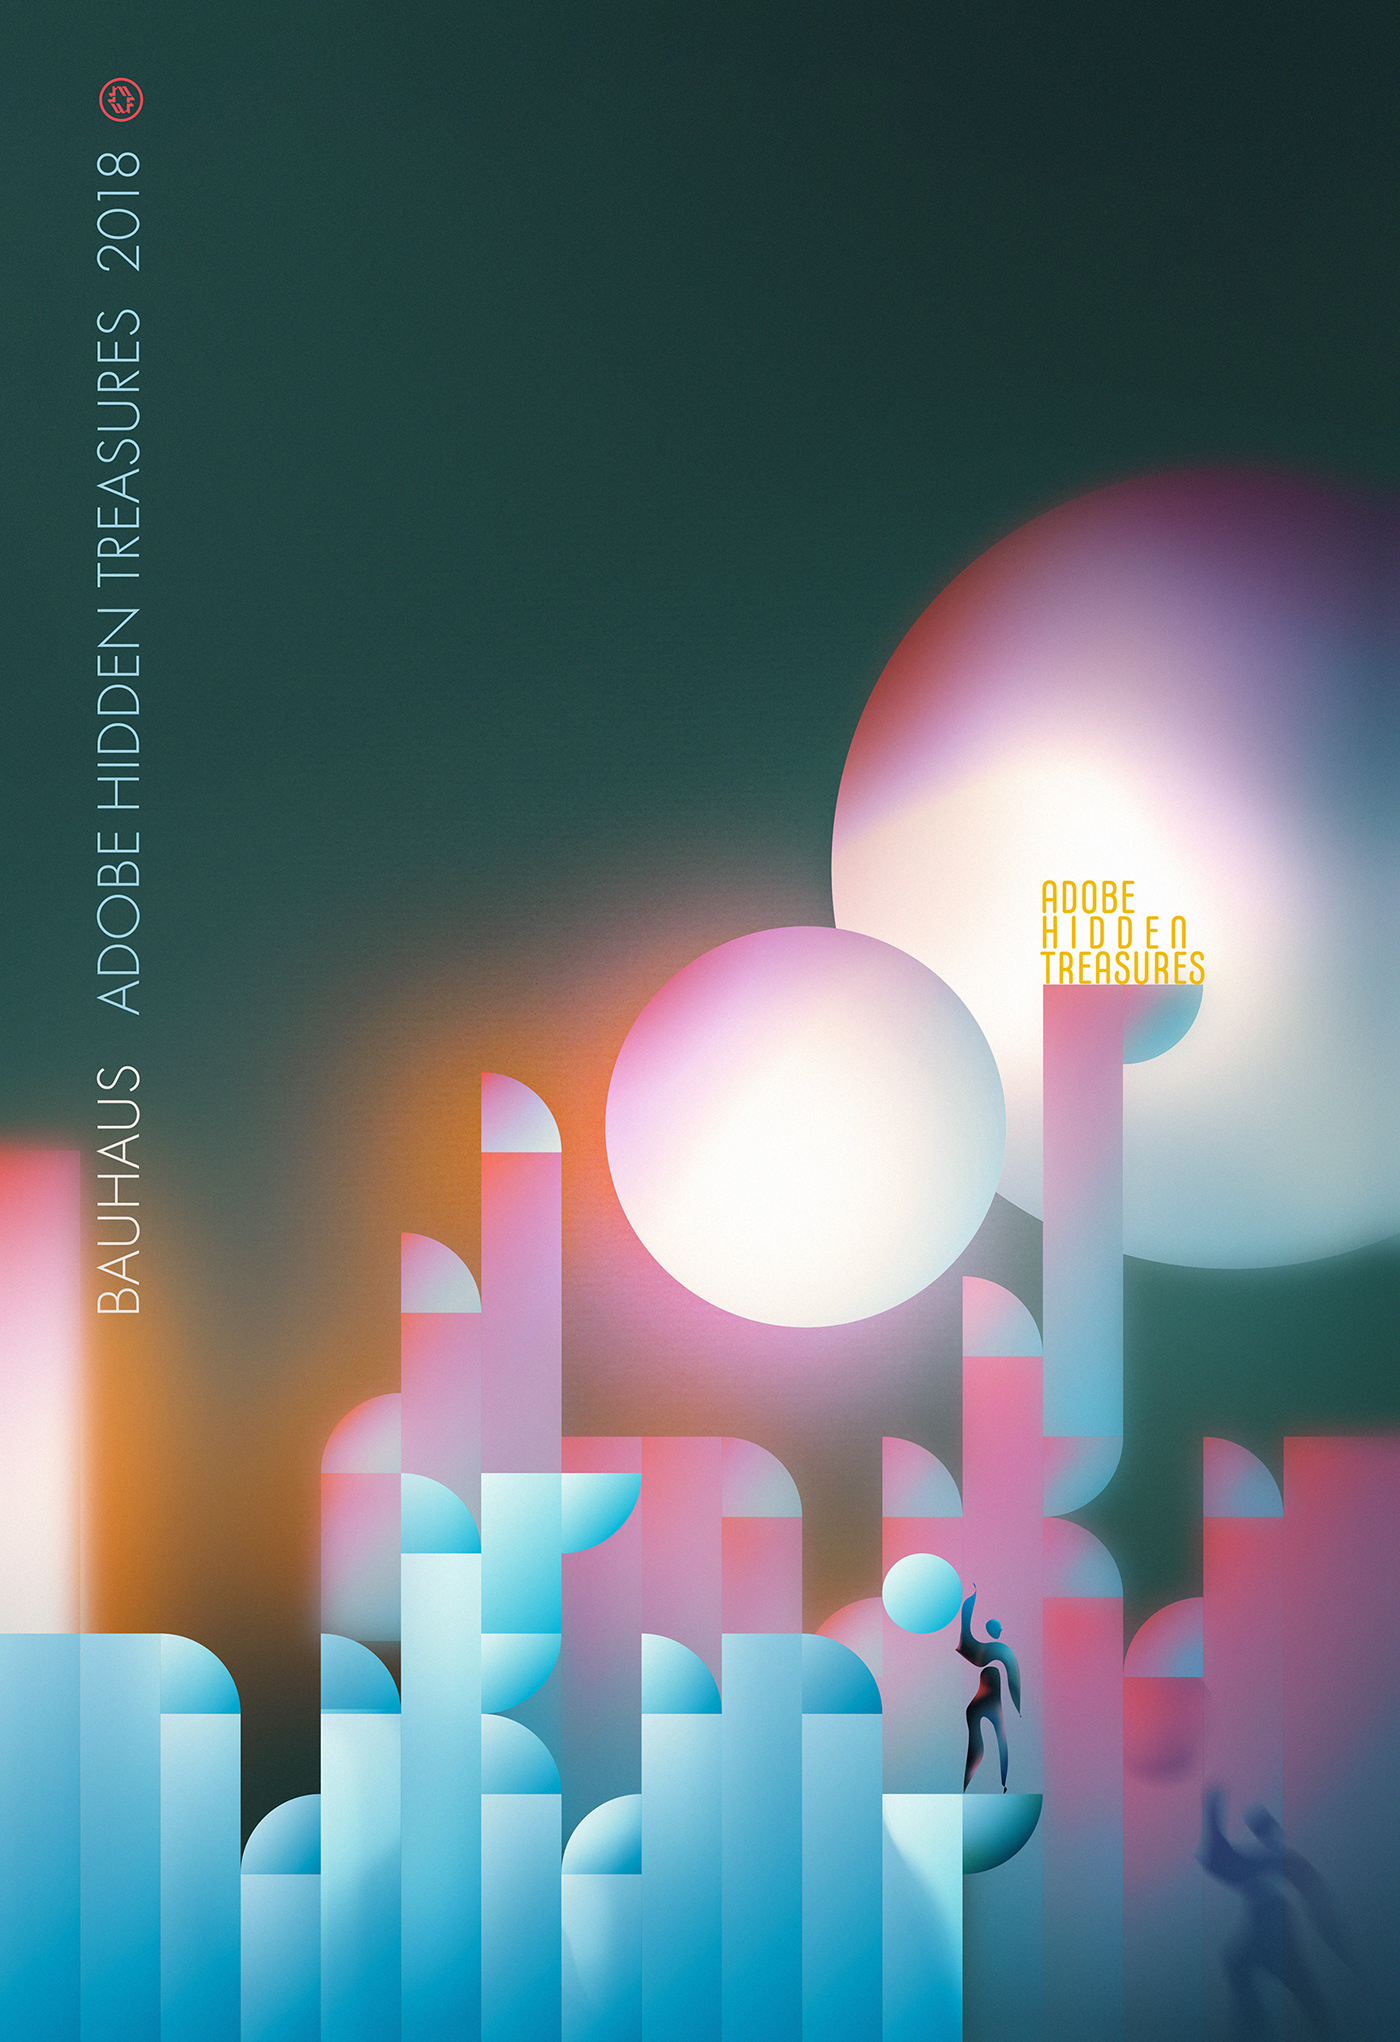 AdobeHiddenTreasures contest bauhaus wflemming color posters bauhaus 100 modernism